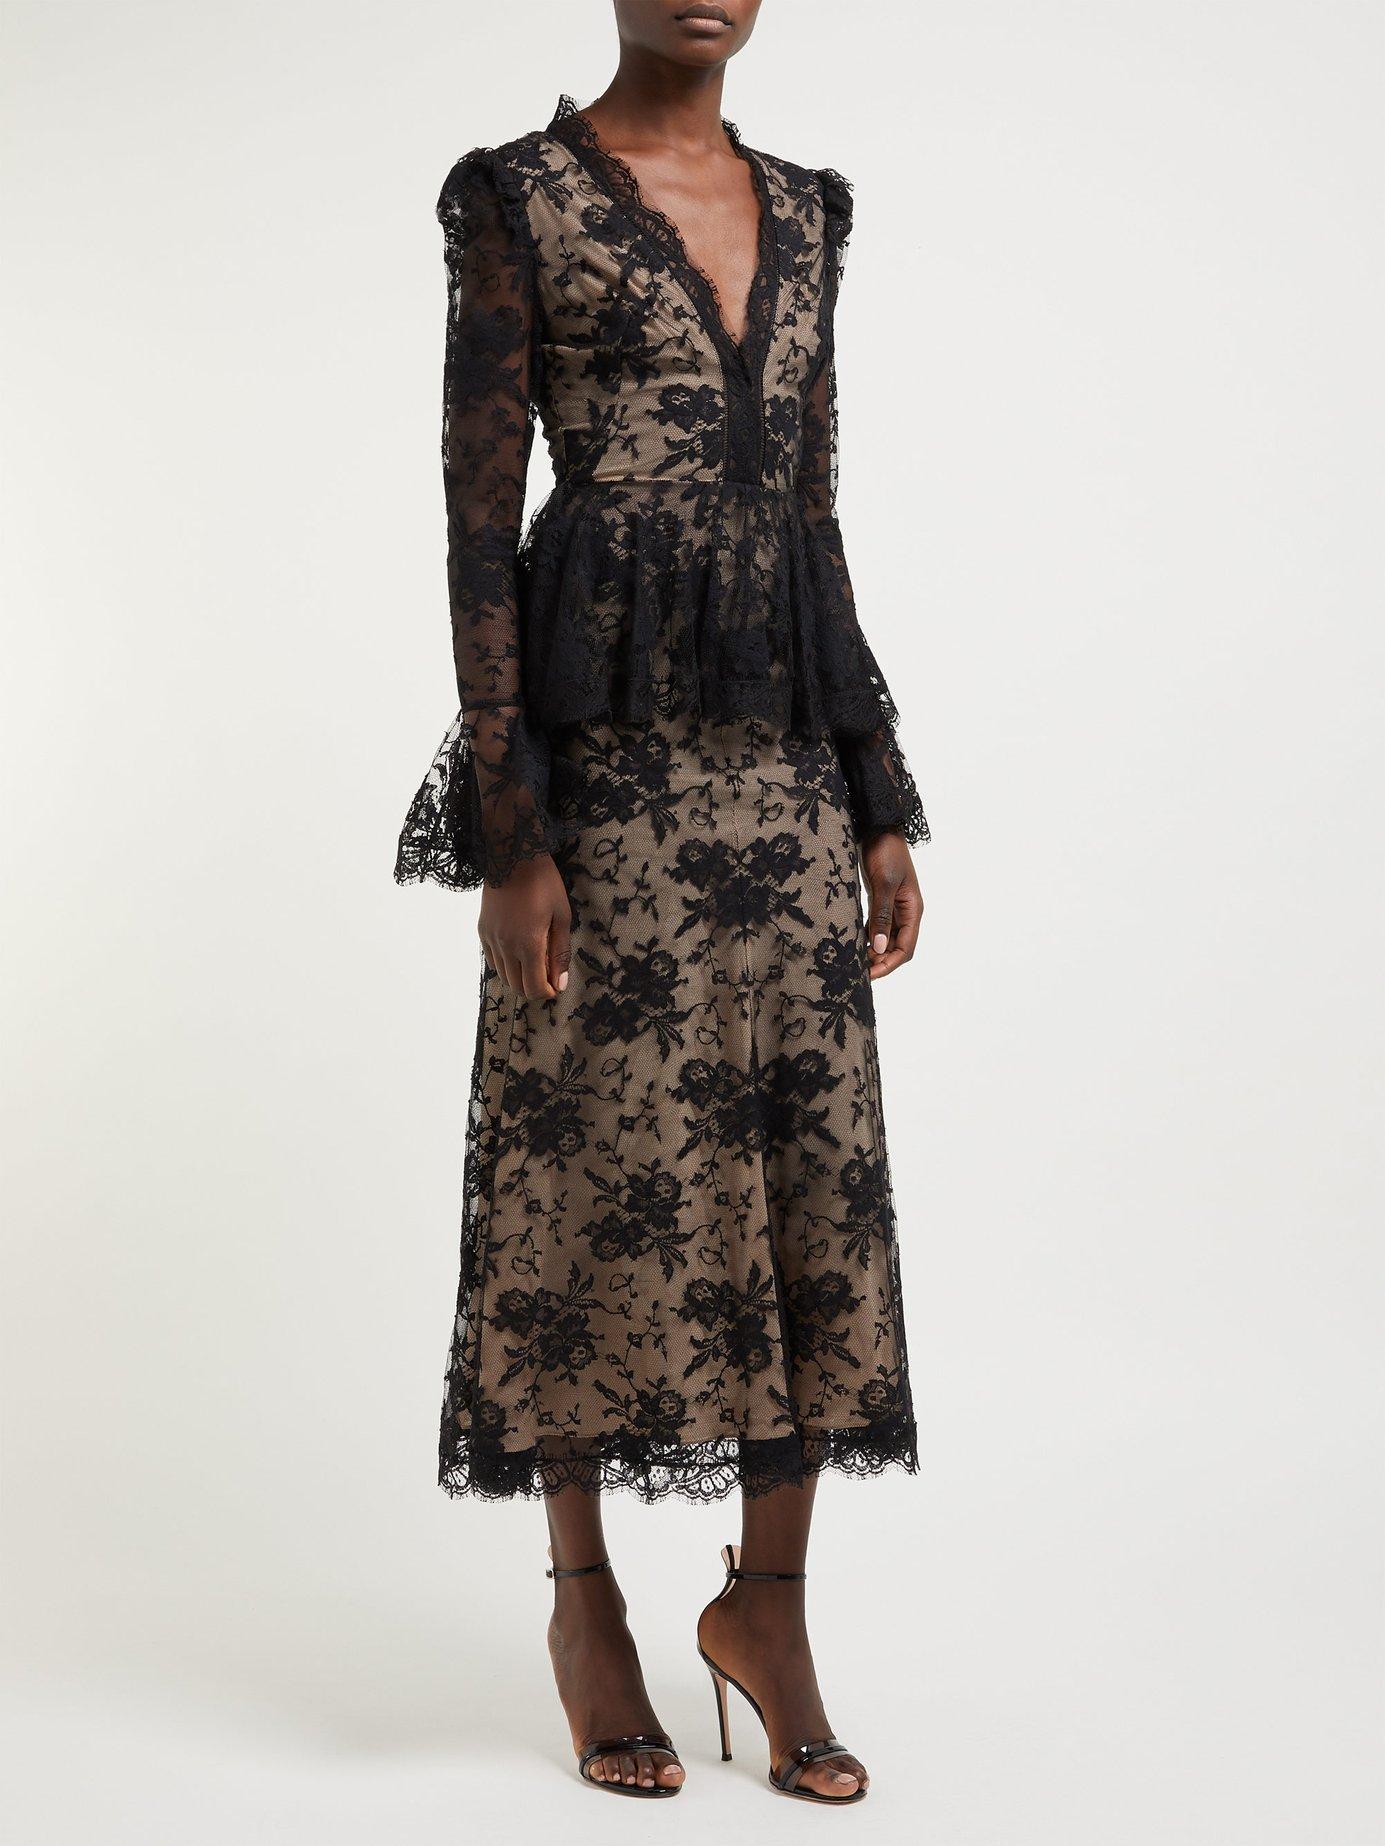 Lyst - Alexander McQueen Sarabande Lace V Neck Peplum Dress in Black